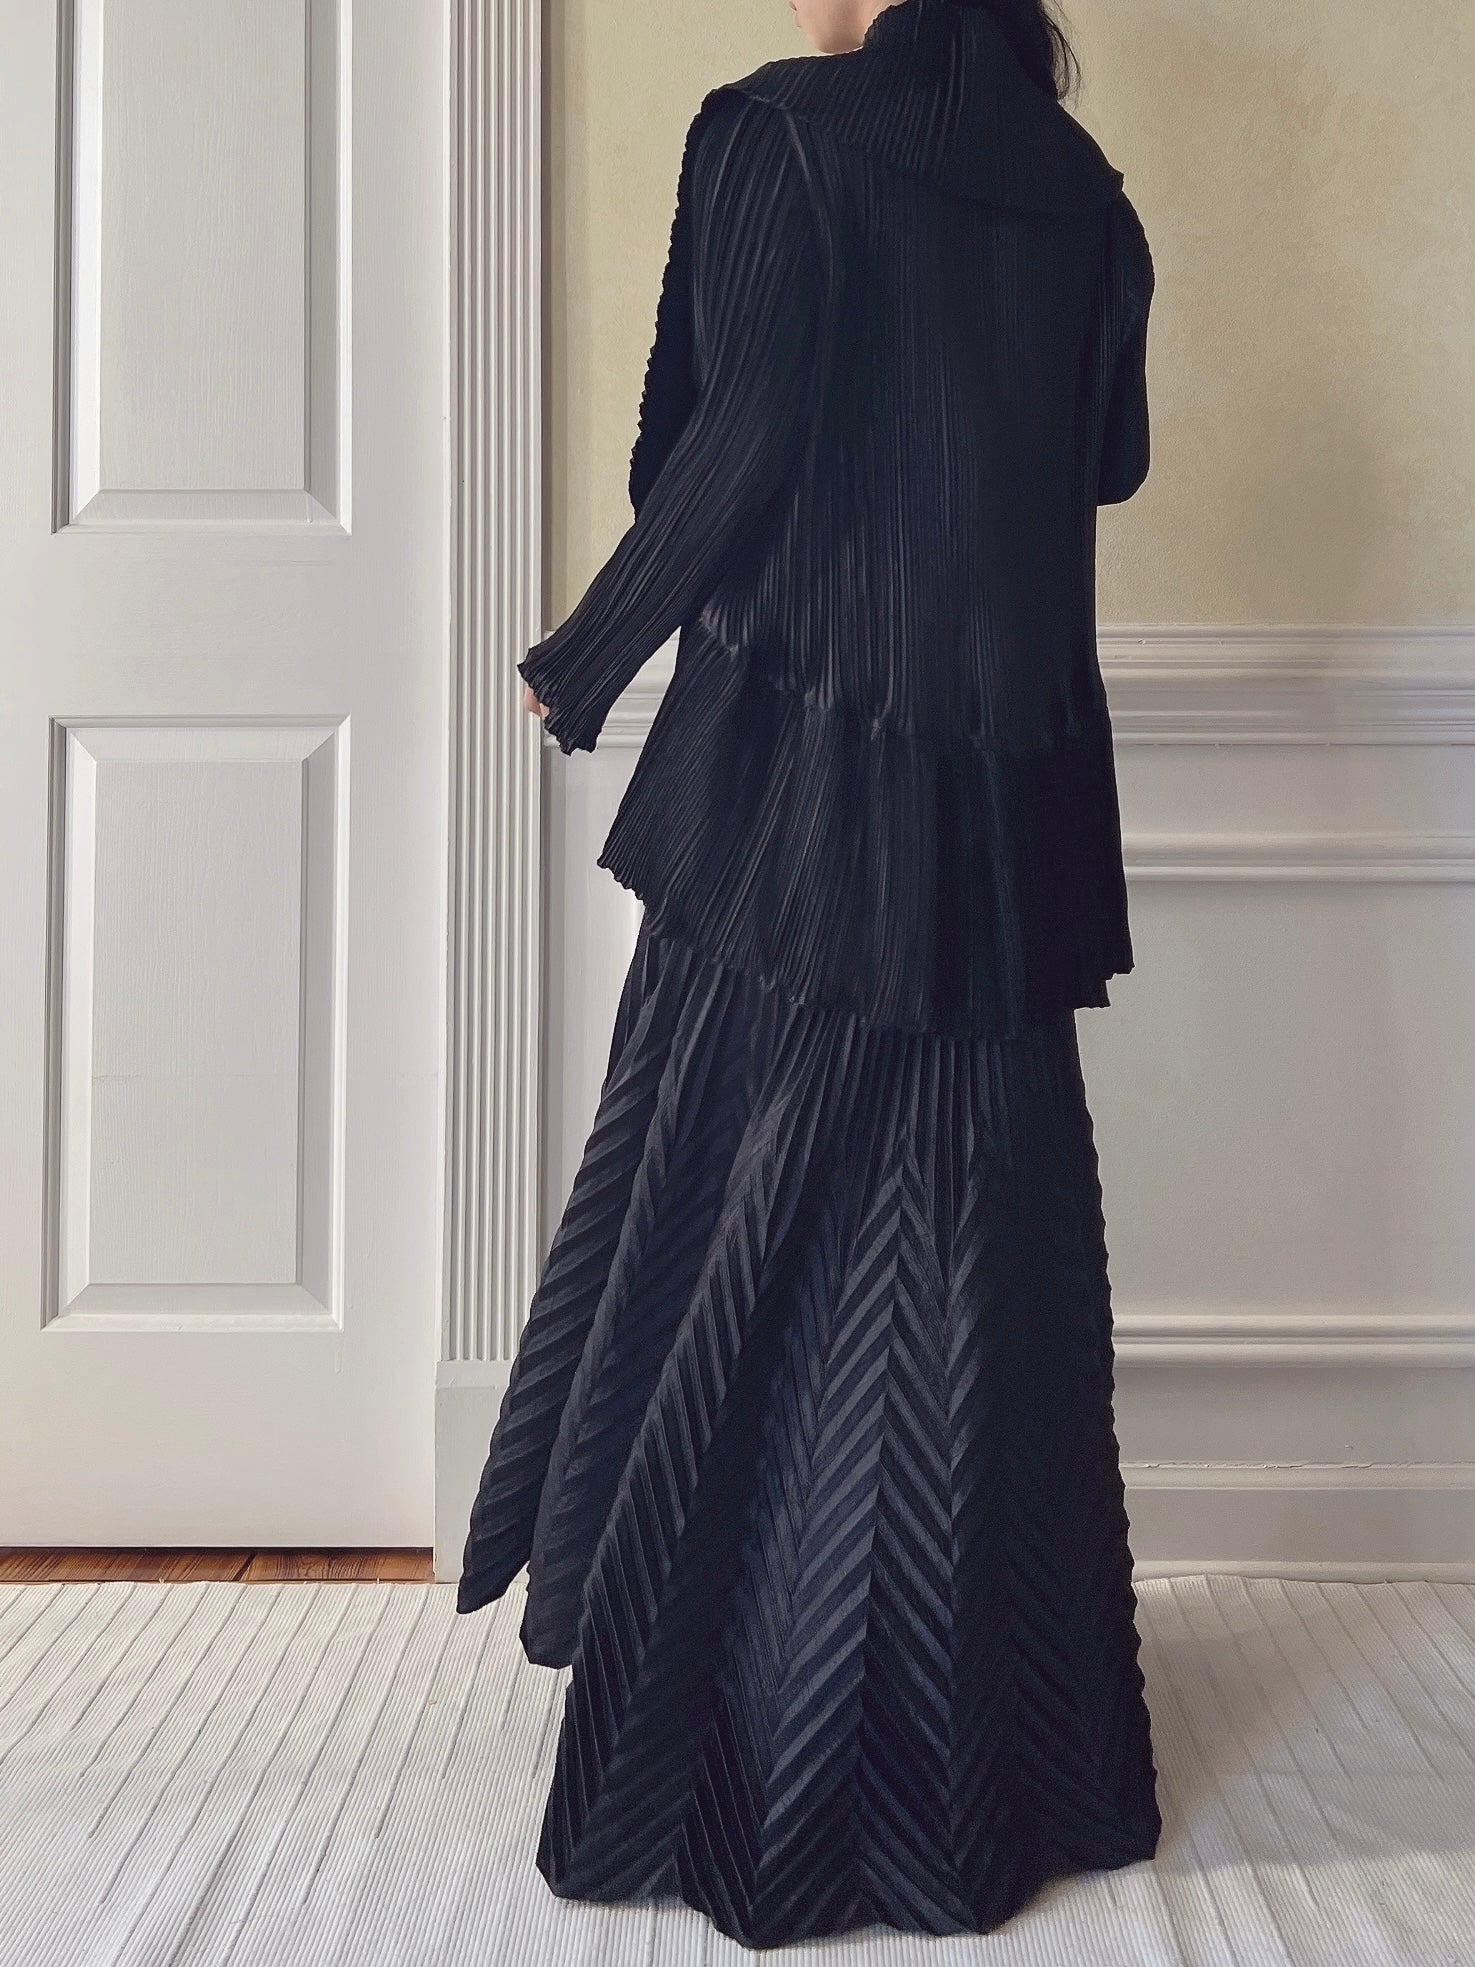 1980s Black Satin Poly Geometric Pleated Skirt - S-M